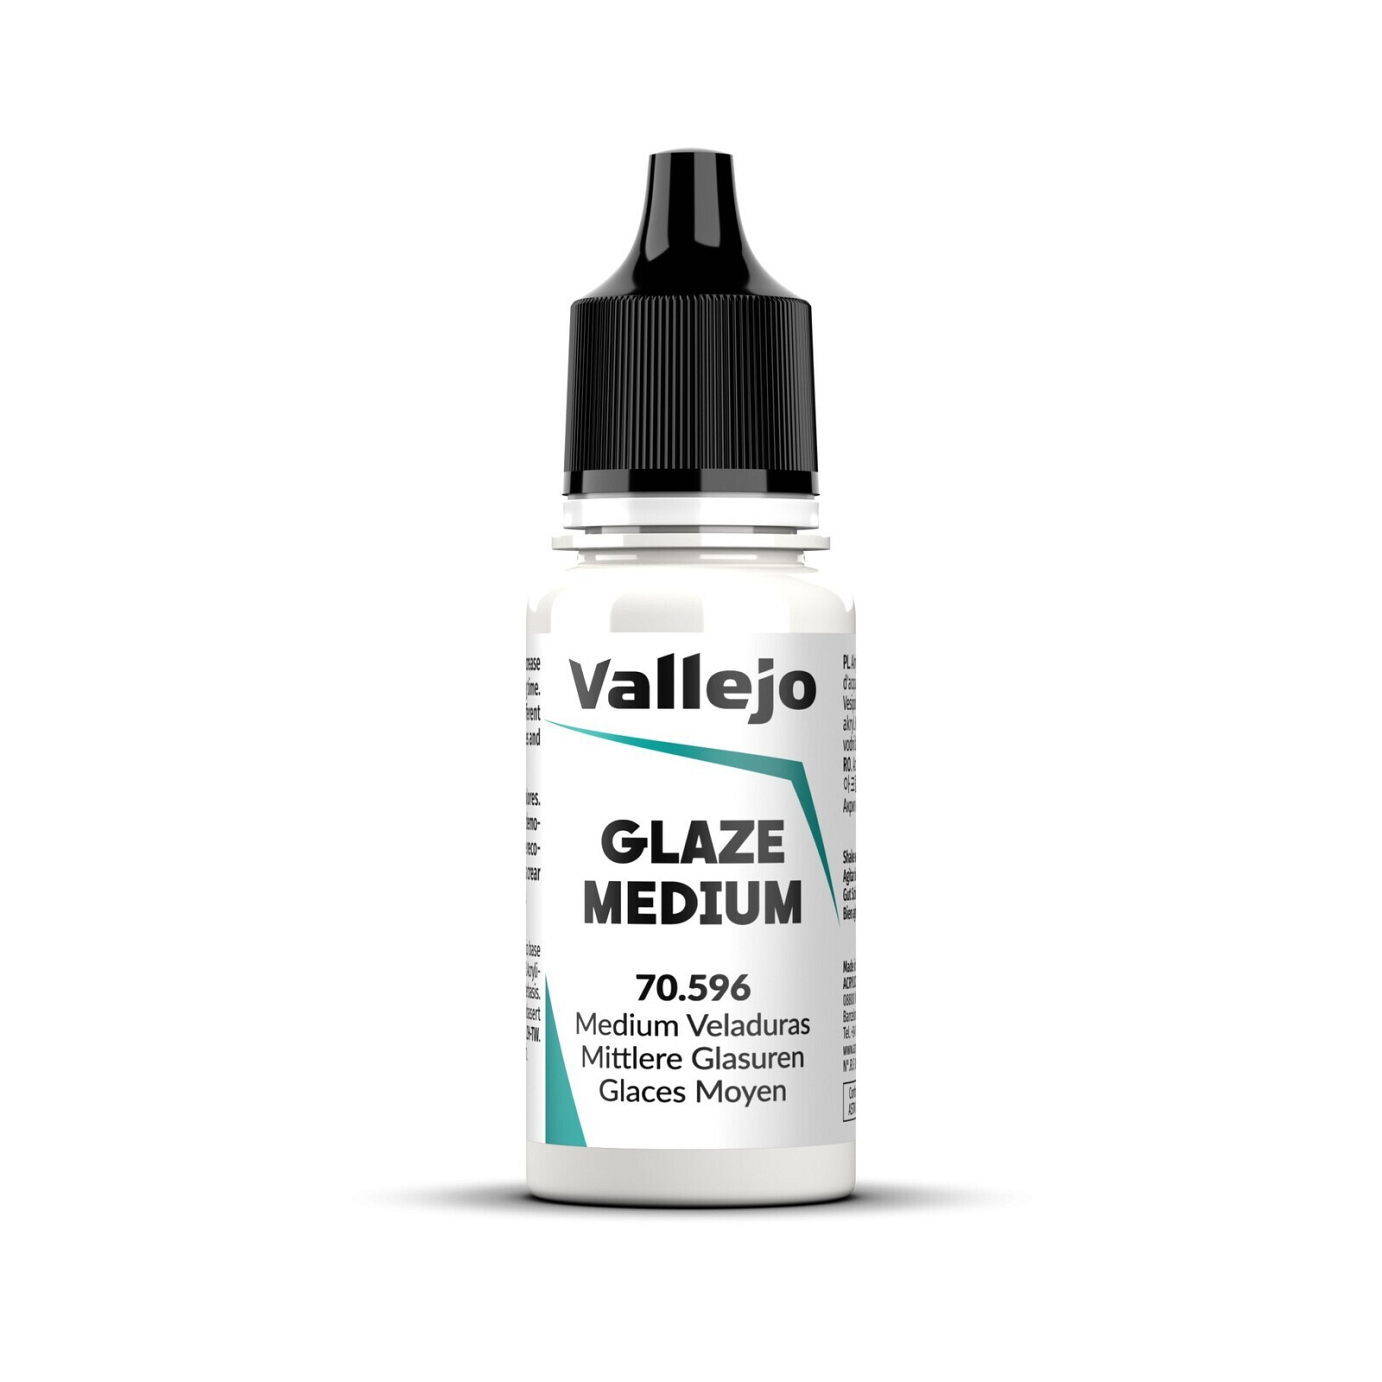 Vallejo Glaze Medium 18ml Acrylic Paint - New Formulation